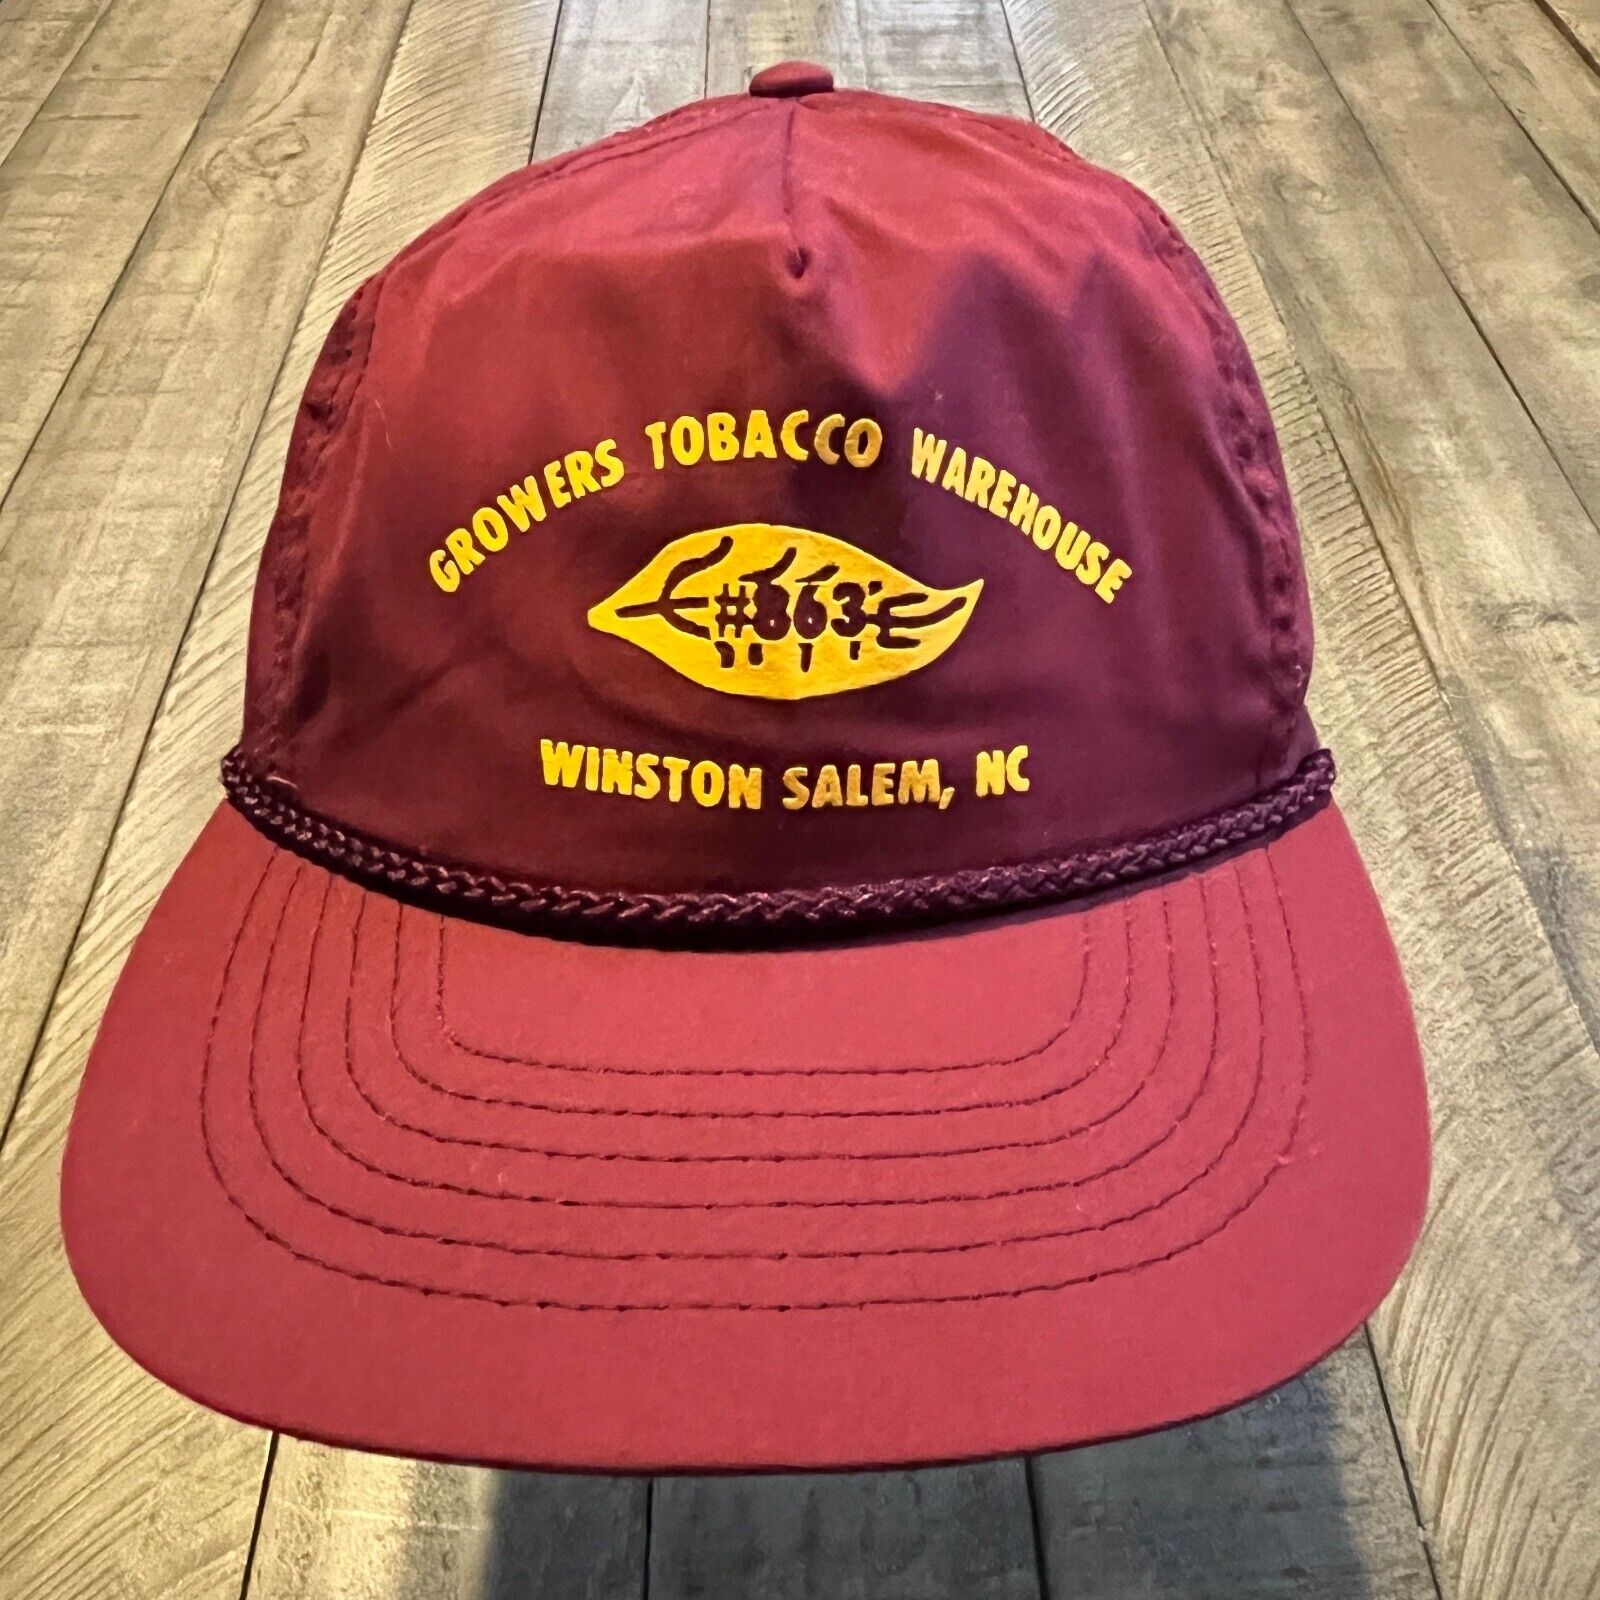 VTG Growers Tobacco Warehouse Local #863 Winston Salem, NC Trucker Cap